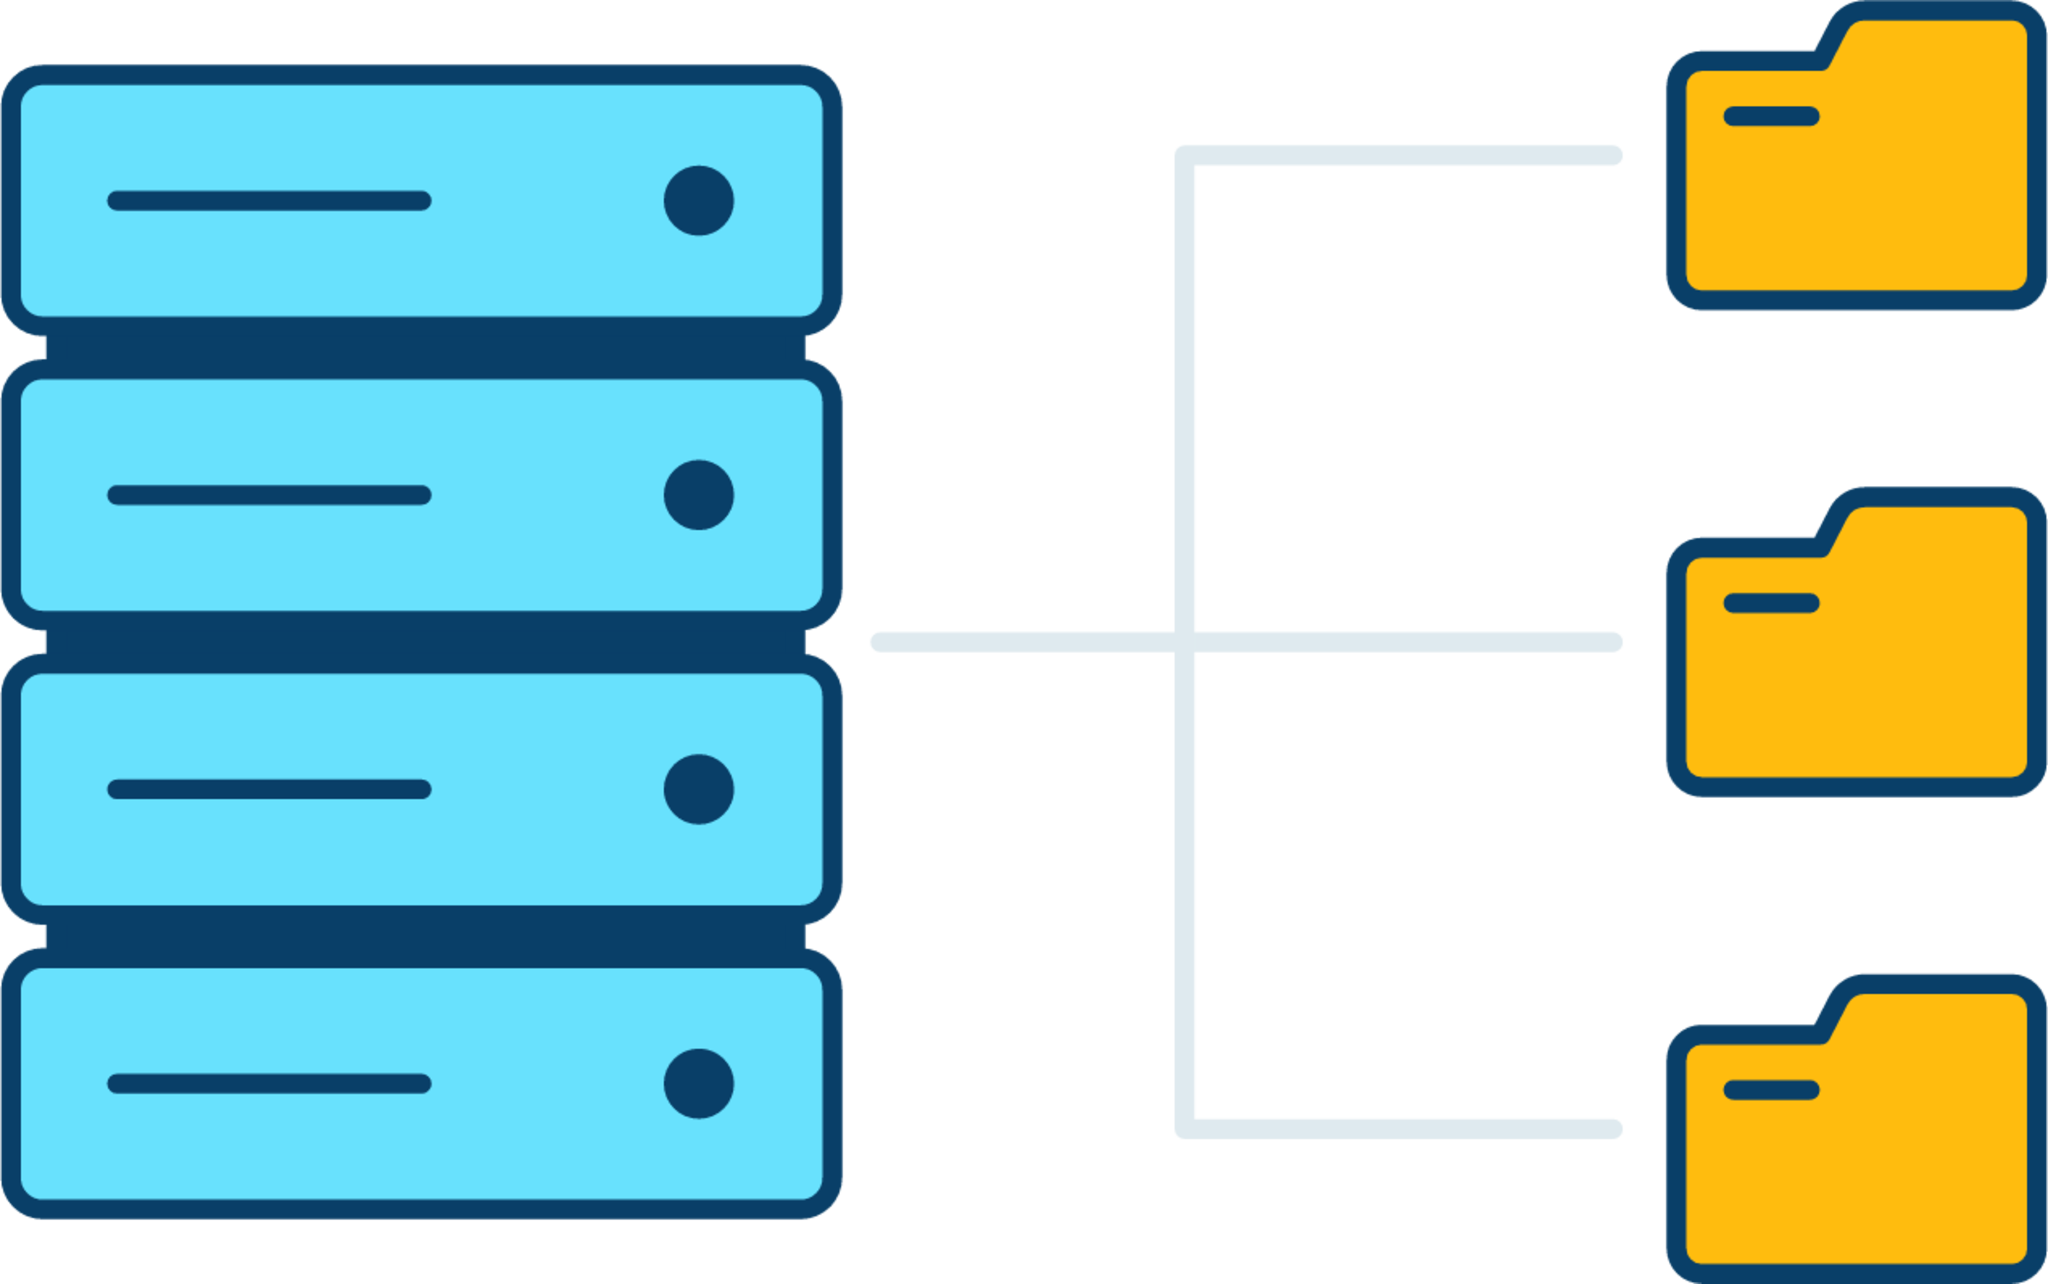 Data storage illustration